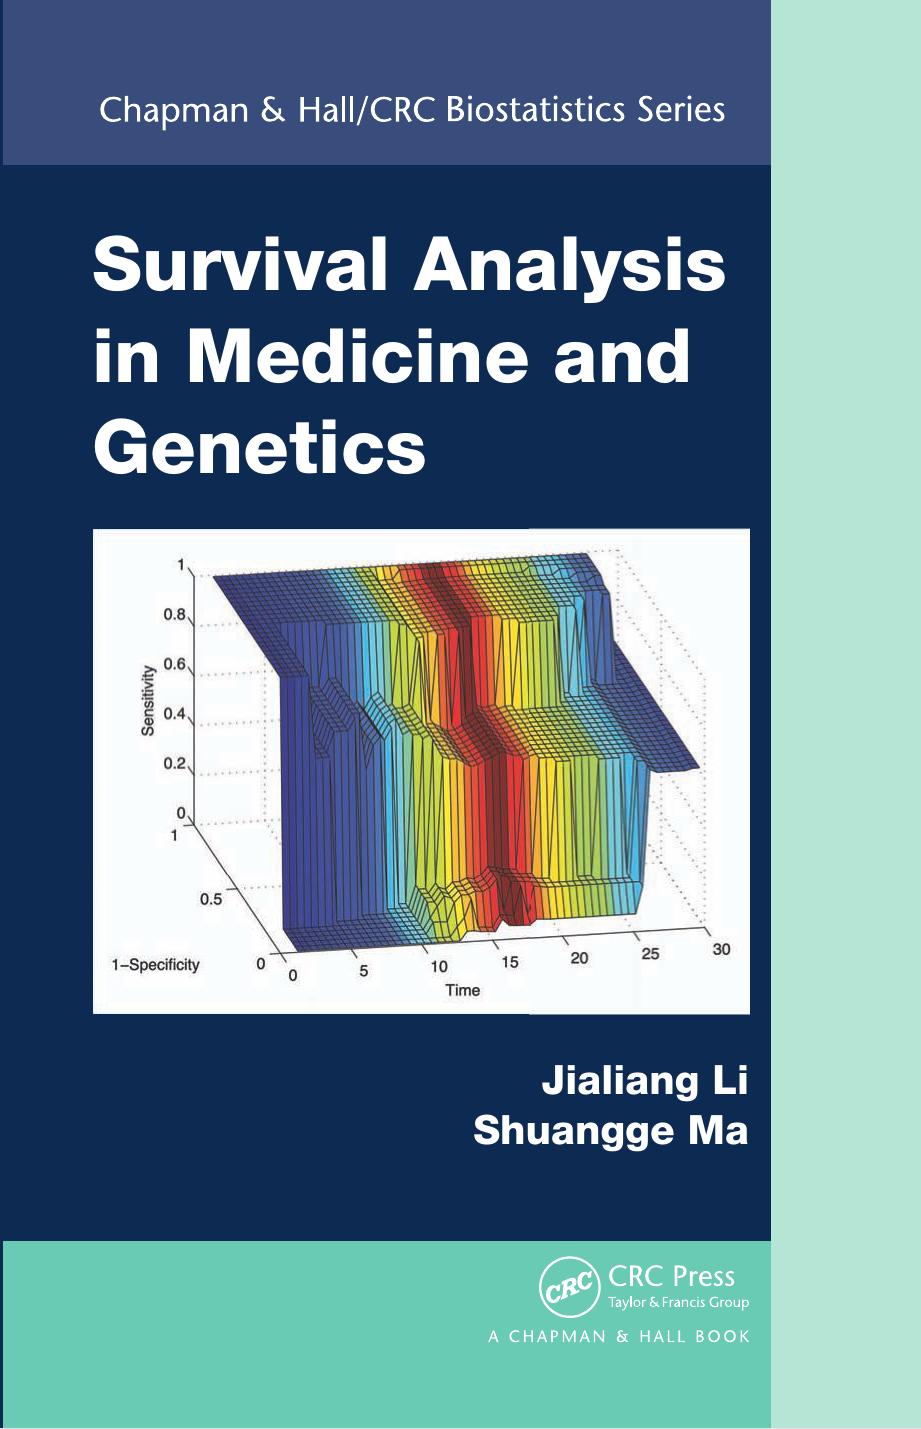 Survival Analysis in Medicine and Genetics.jpg